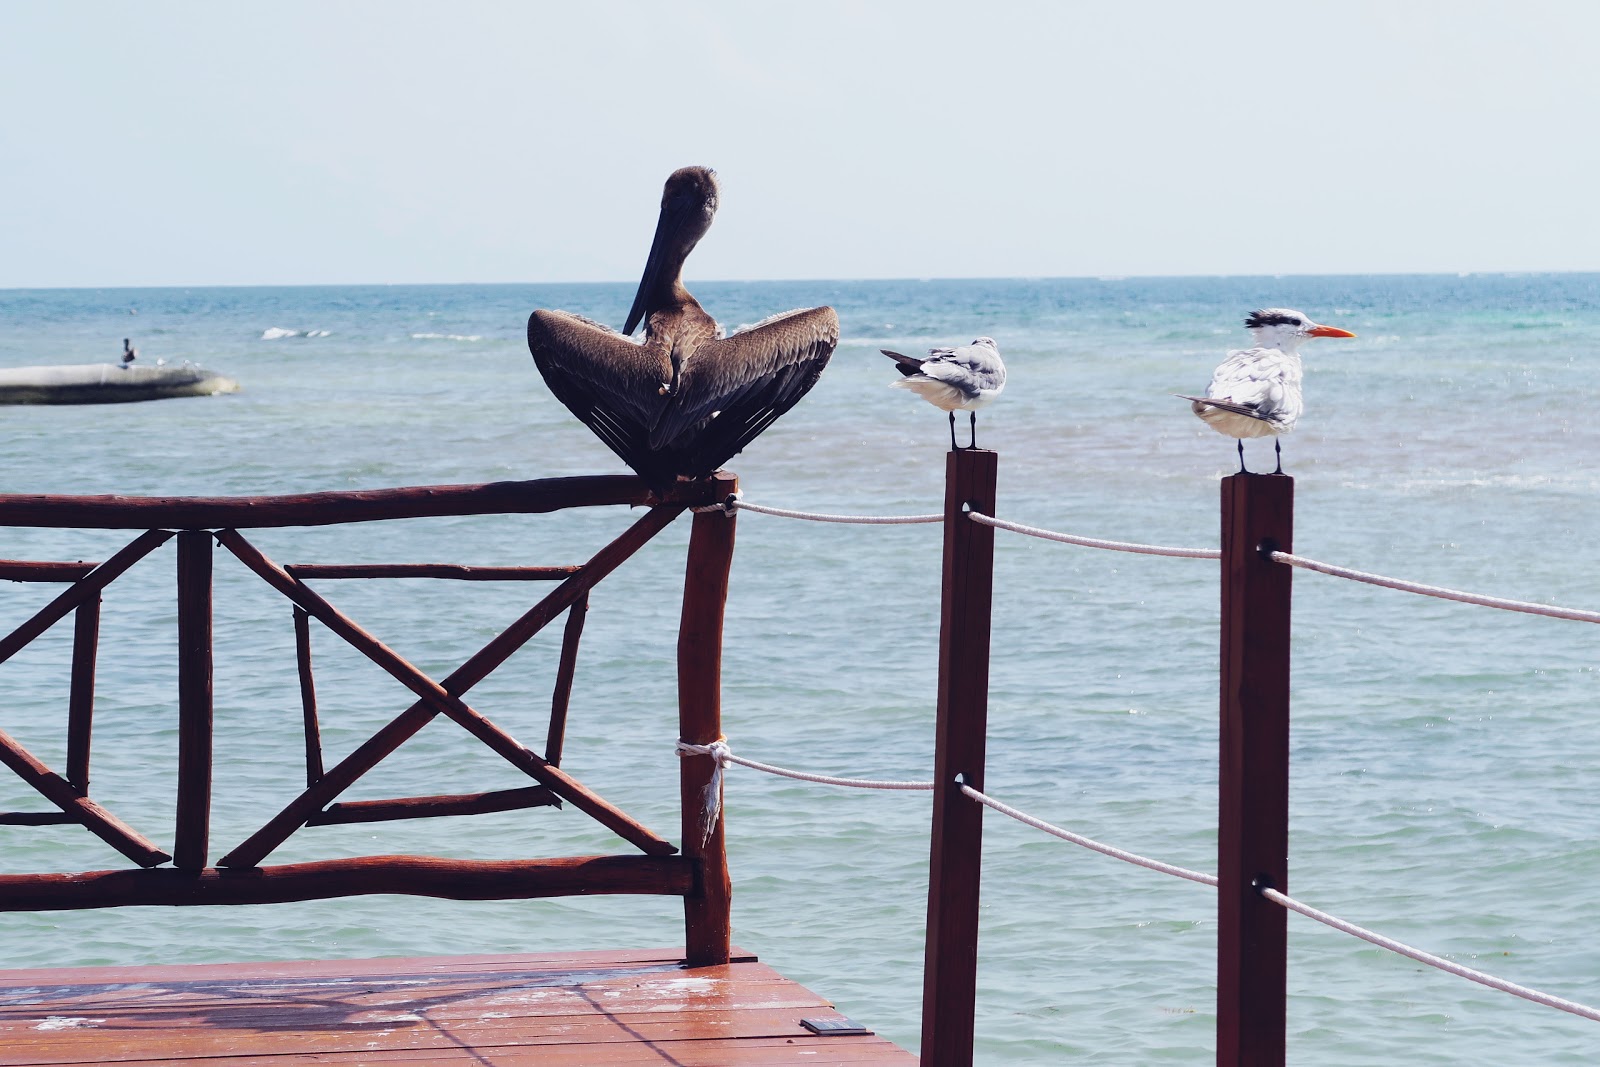 Float on, pelican